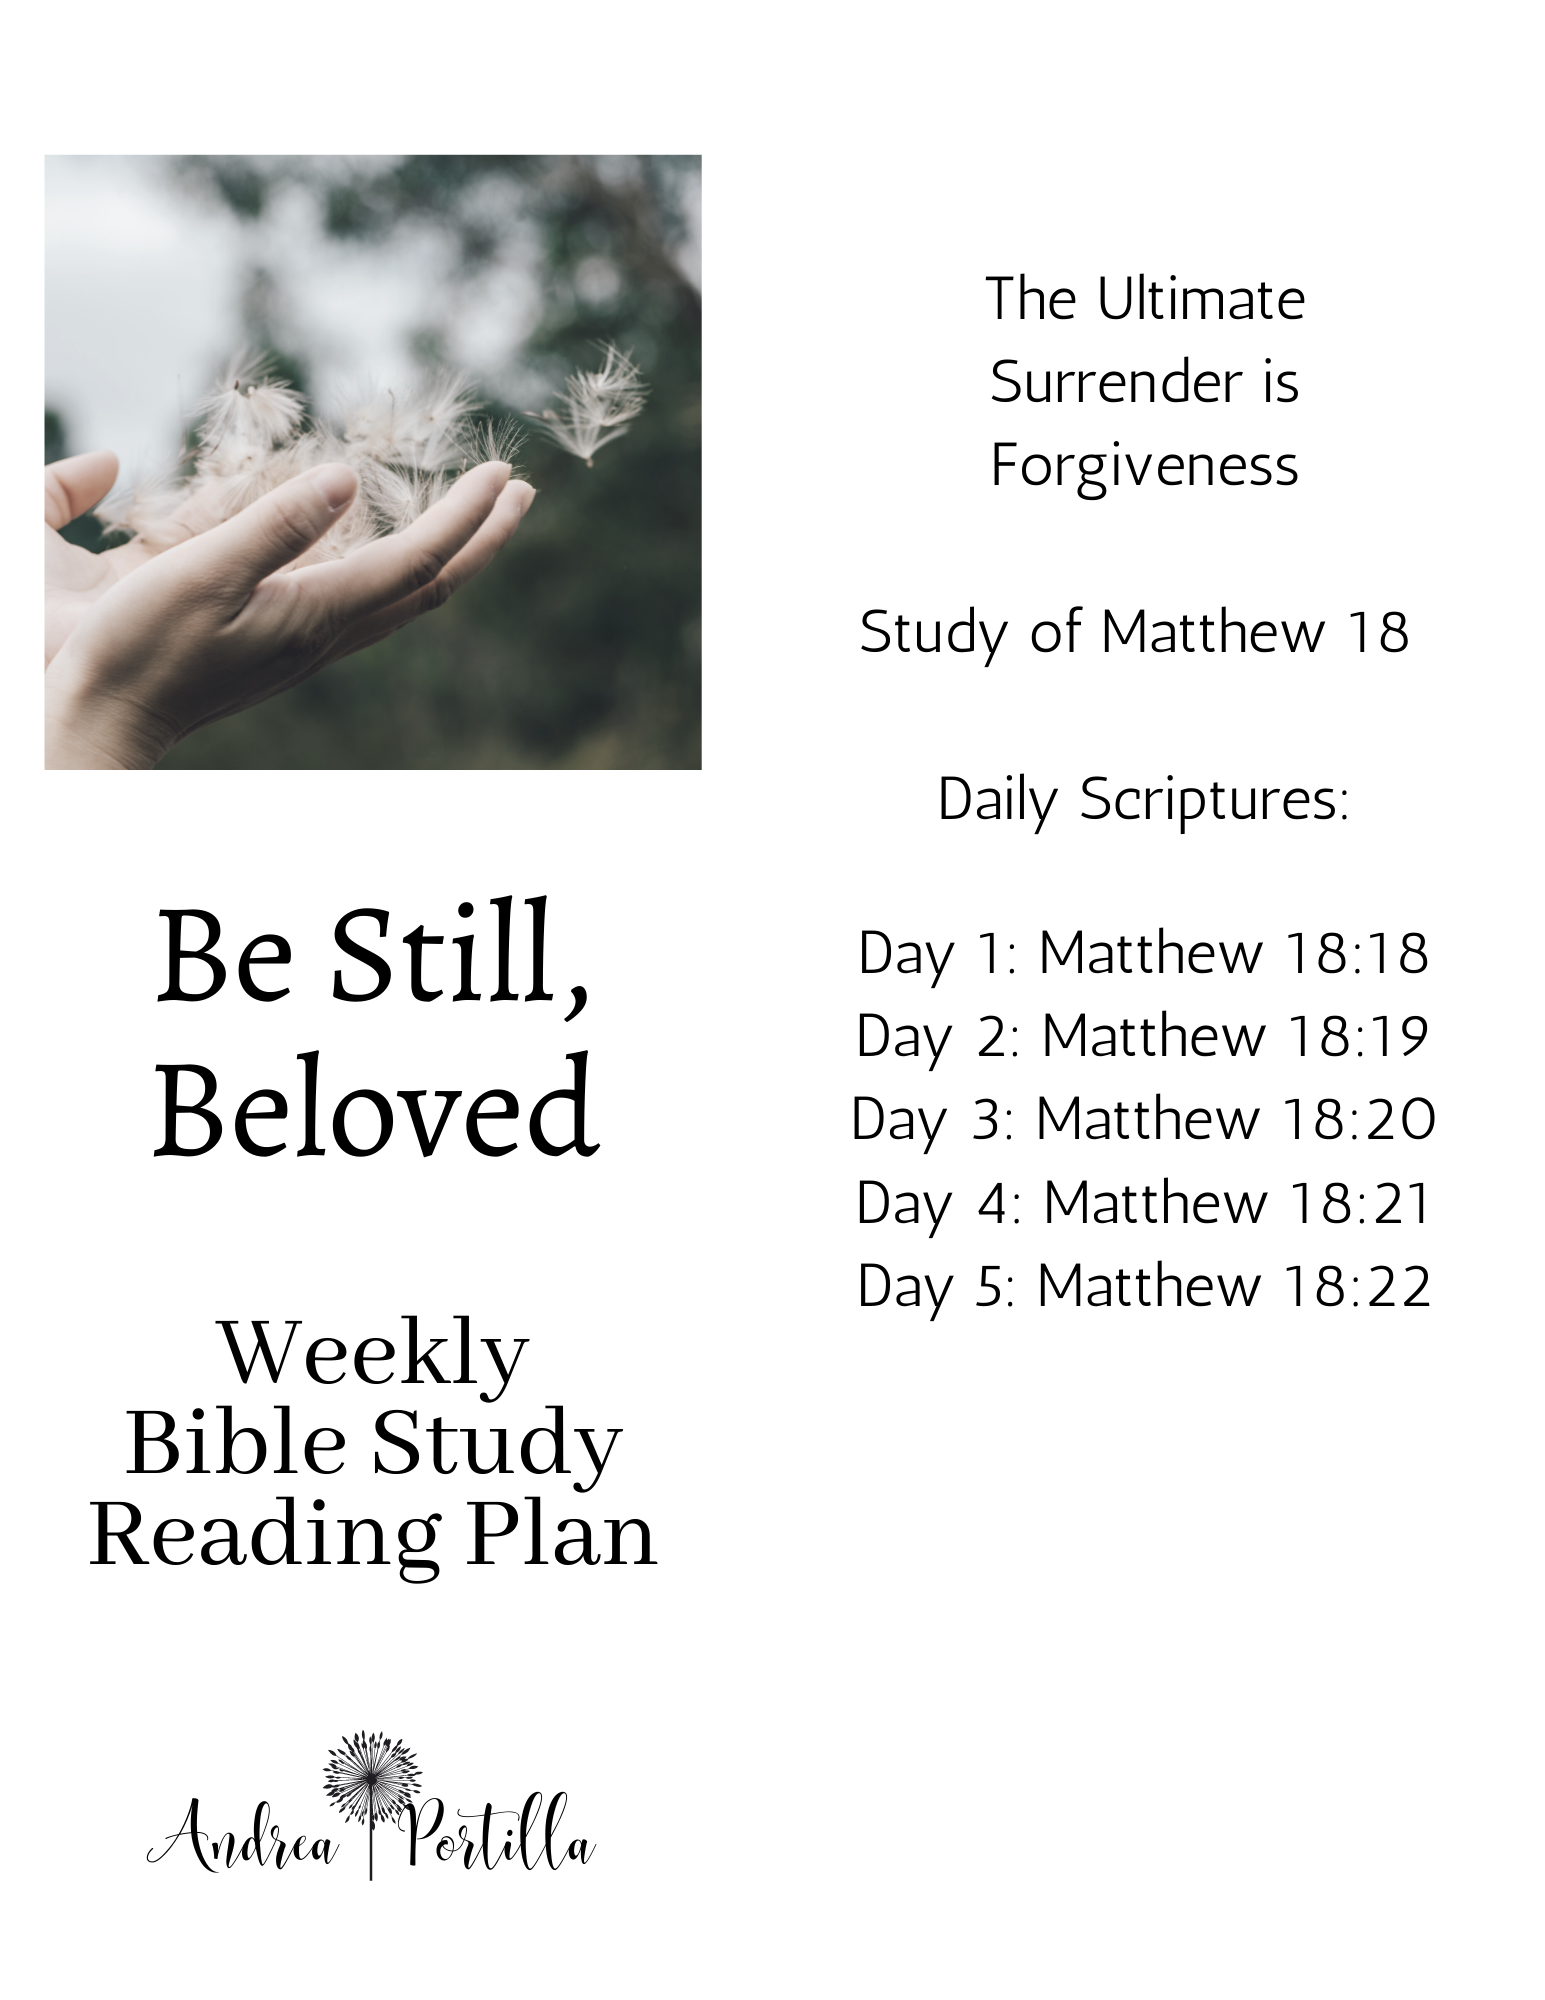 Study on Forgiveness from Matthew 18 (Copy)